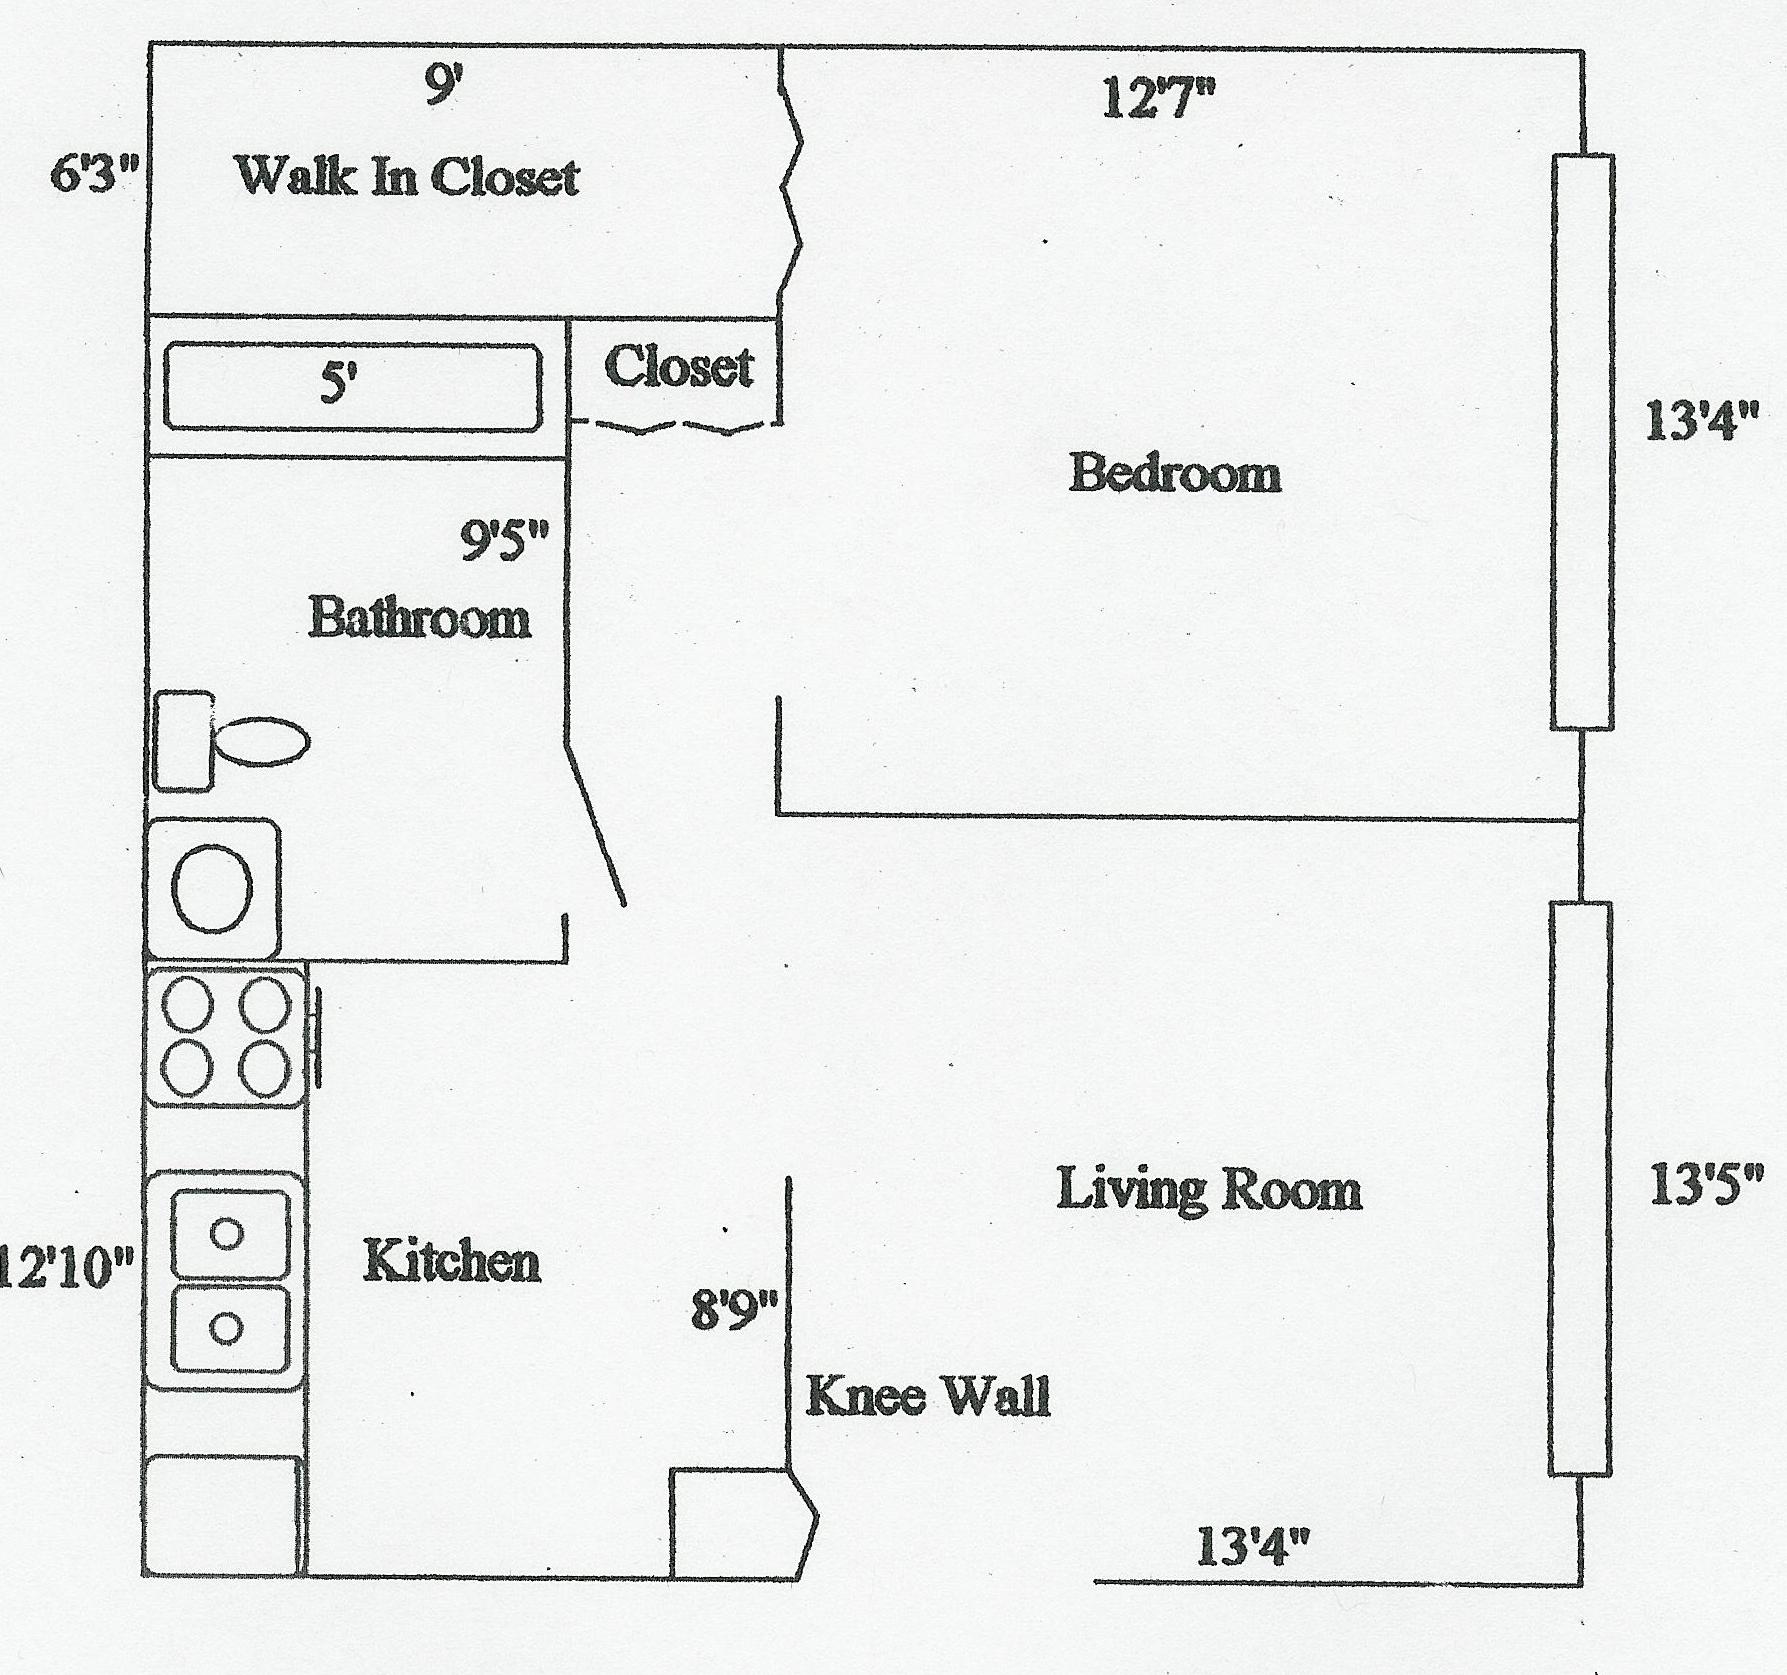 studio apartment floor plan